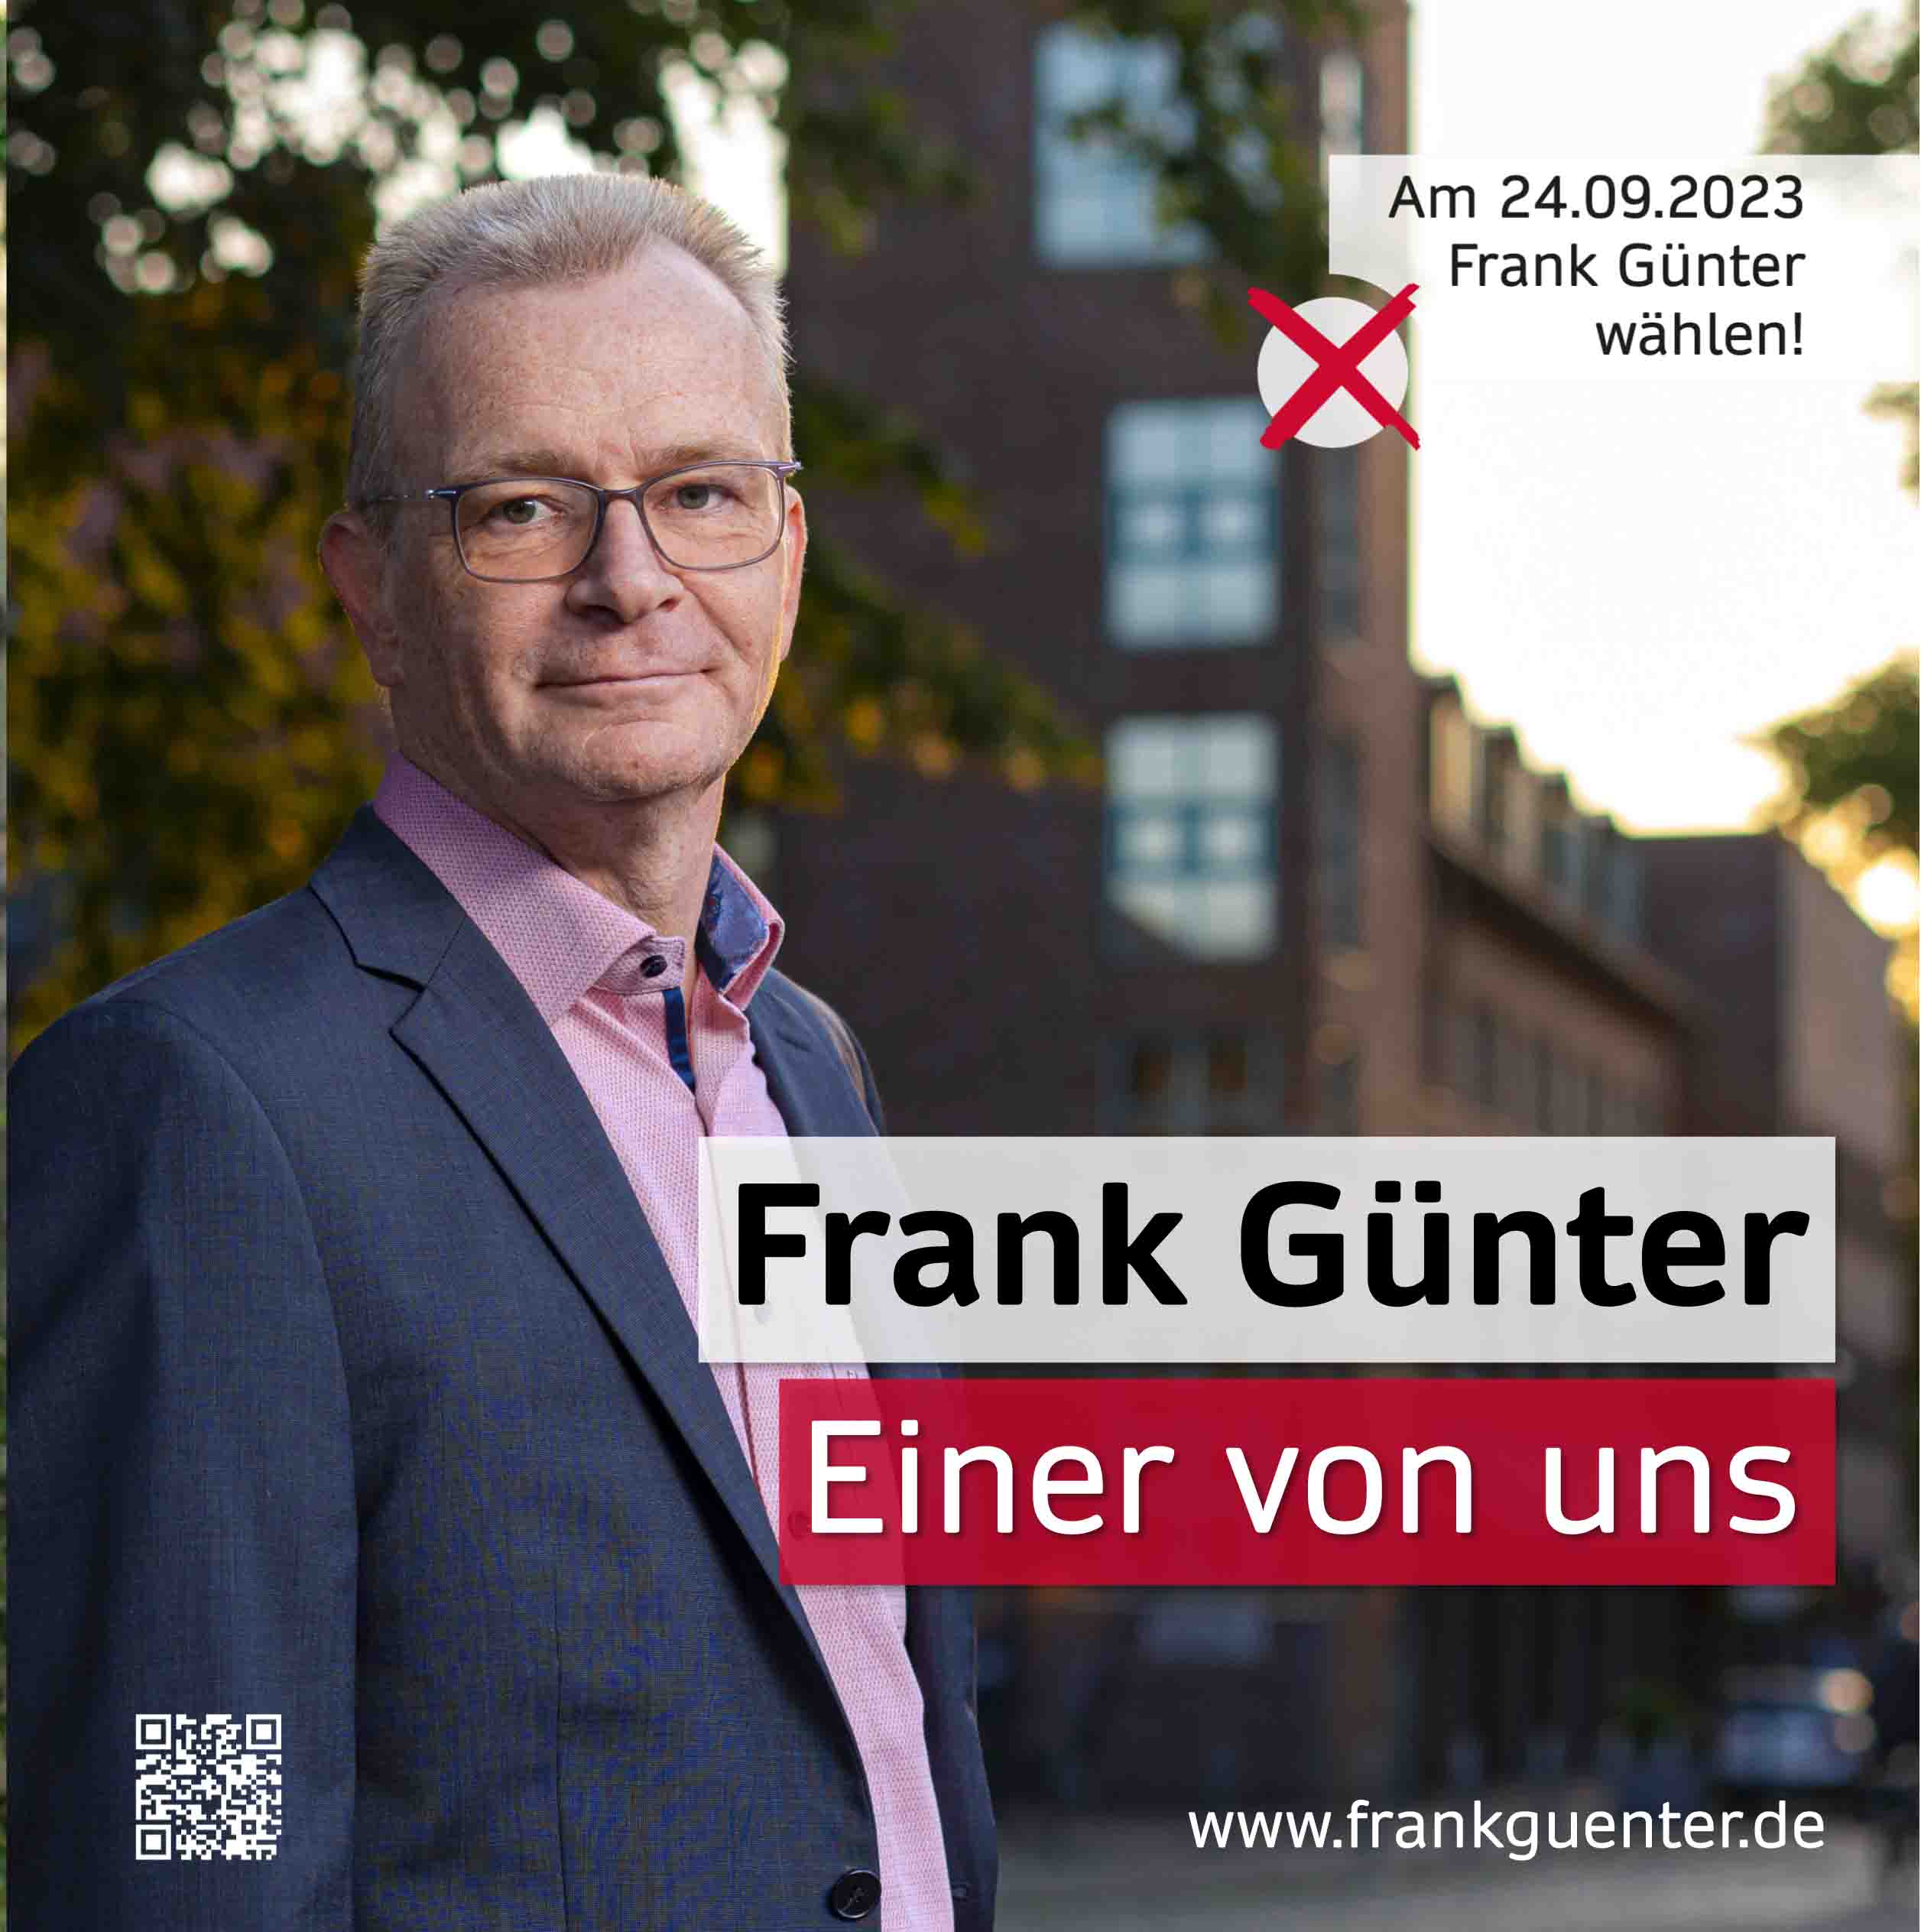 Frank Günter - Unser Pro-Kaki-Kandidat im Wahlkampf